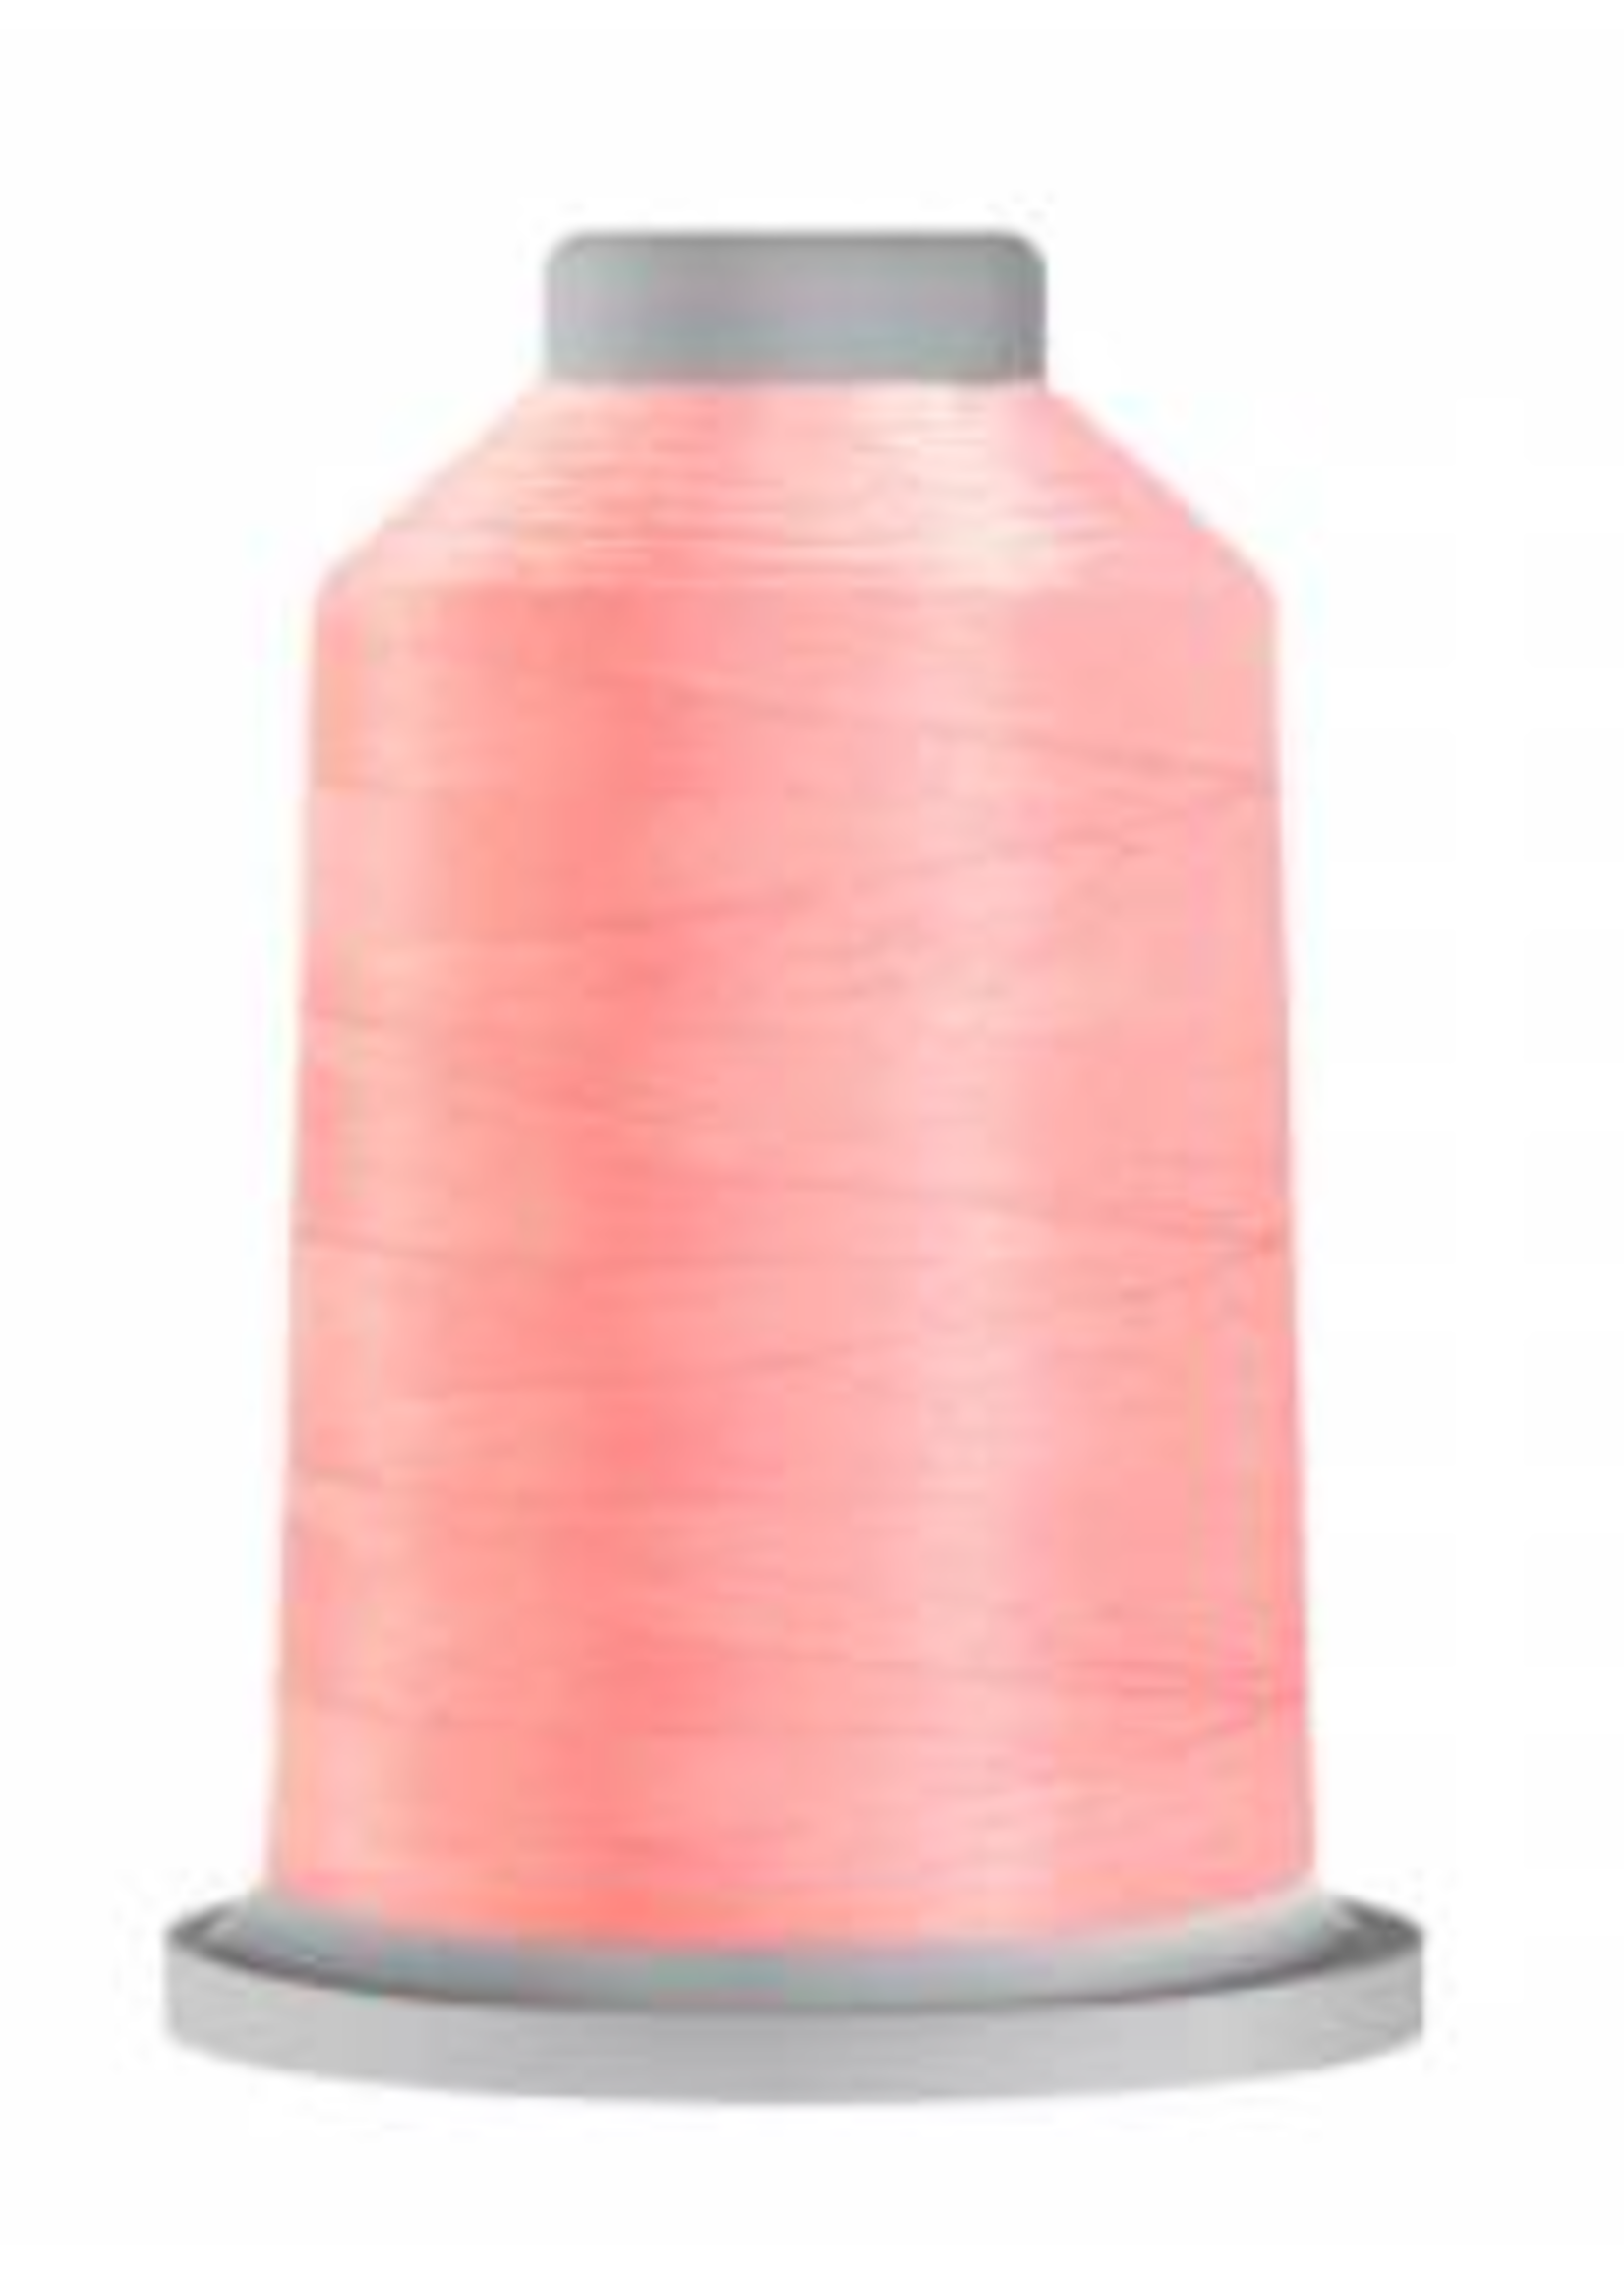 Glide Glide 40wt Polyester Thread 1,100 yd Mini King Spool Pink Lemonade # 410-70217